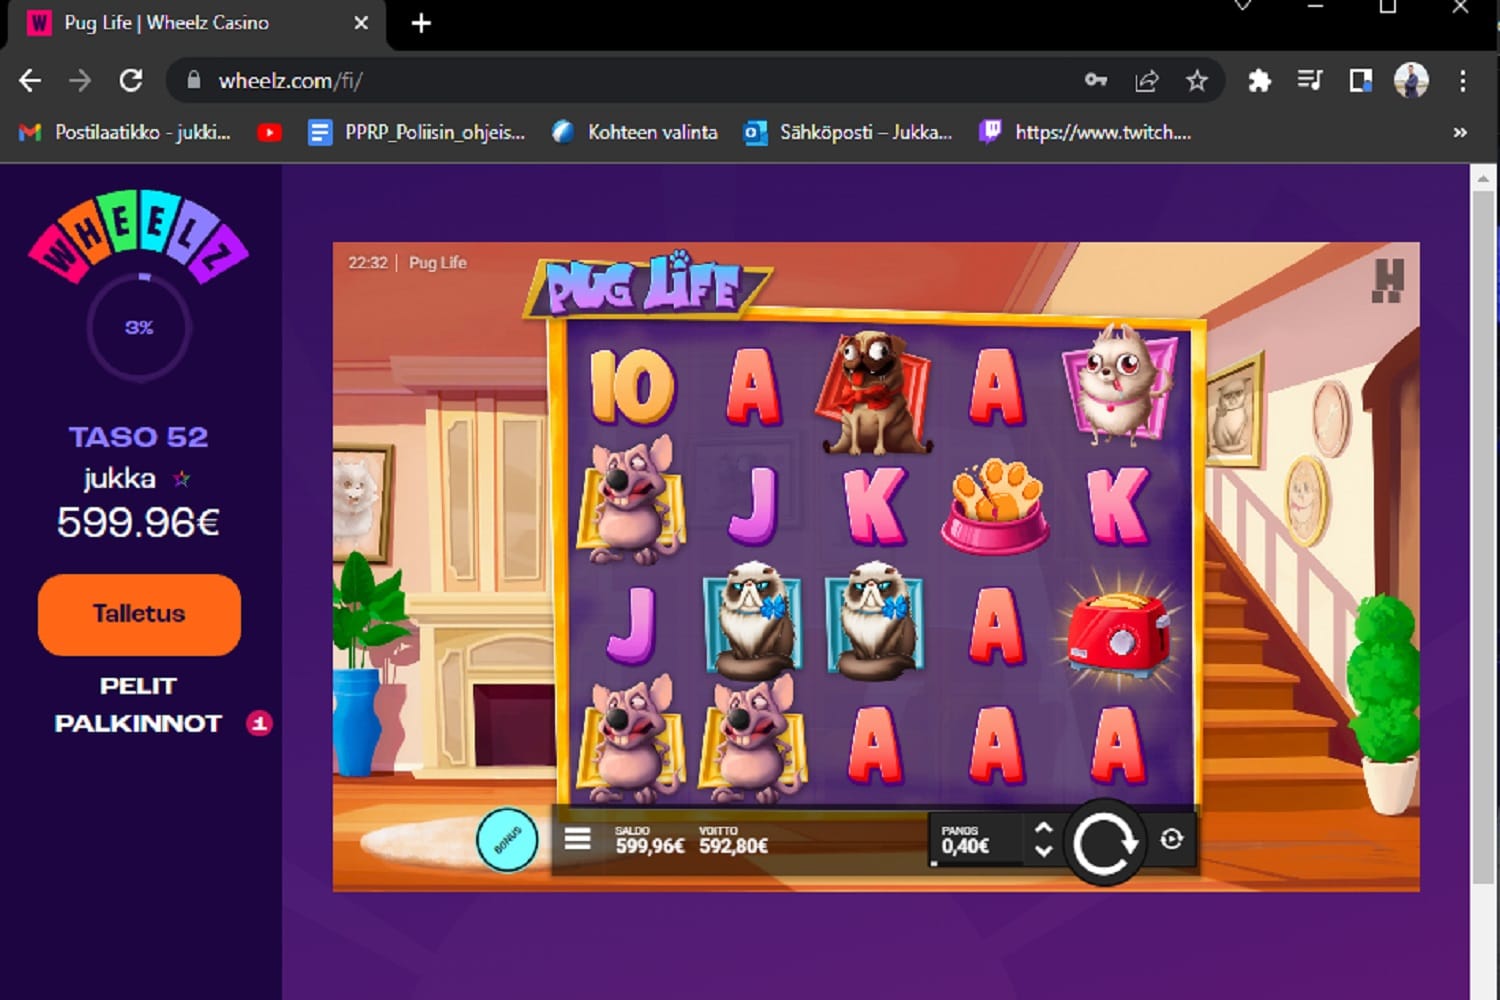 Pug Life casino win picture by Jukkiss 592.80€ 1482x 28.11.2022 Wheelz